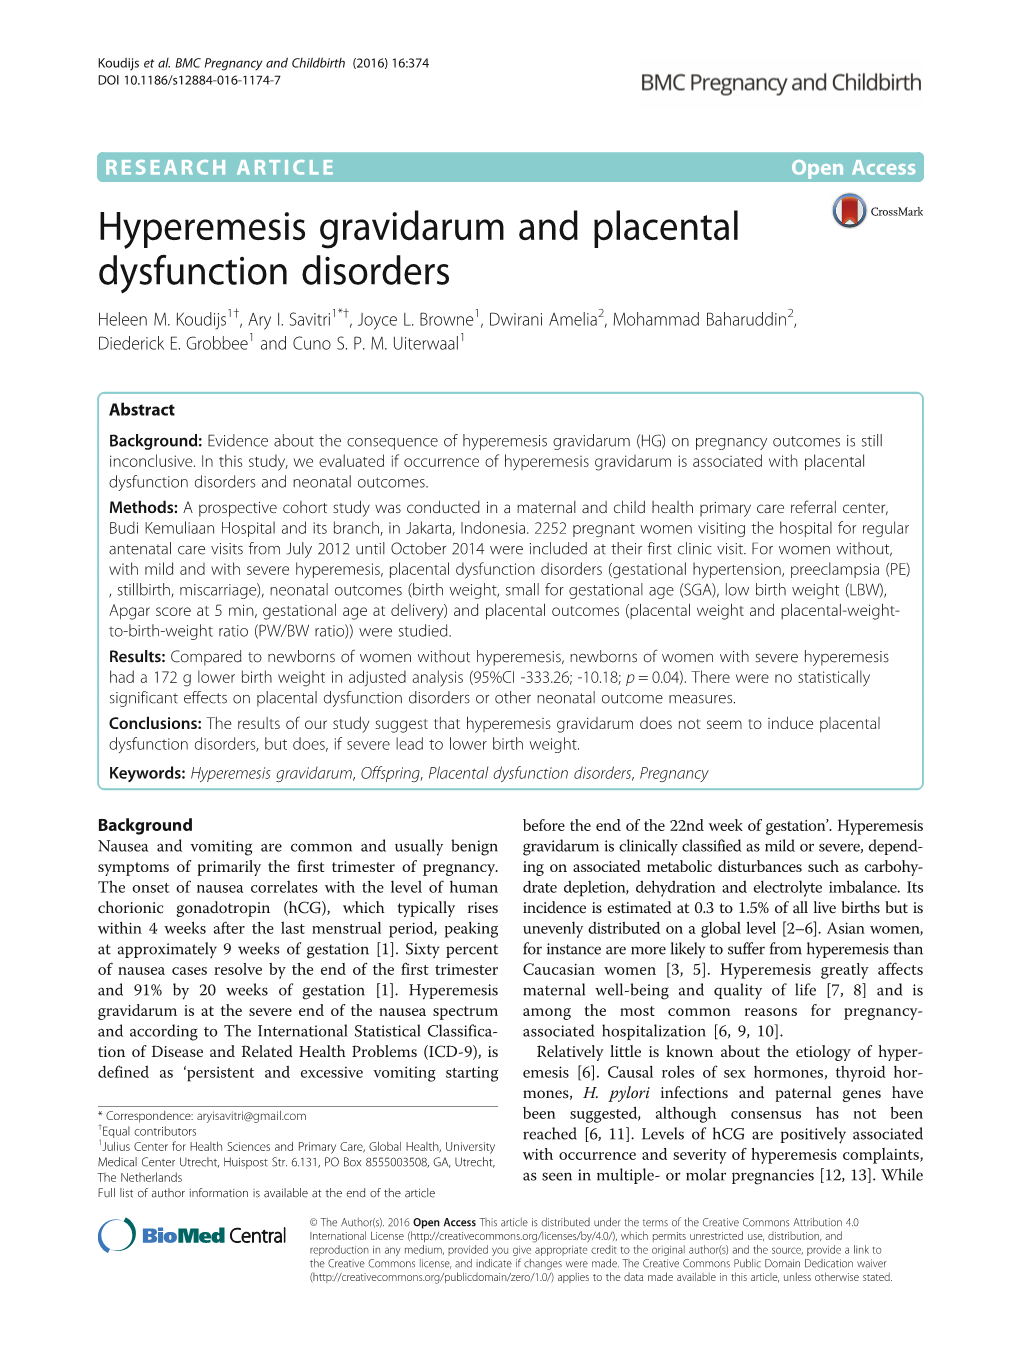 Hyperemesis Gravidarum and Placental Dysfunction Disorders Heleen M